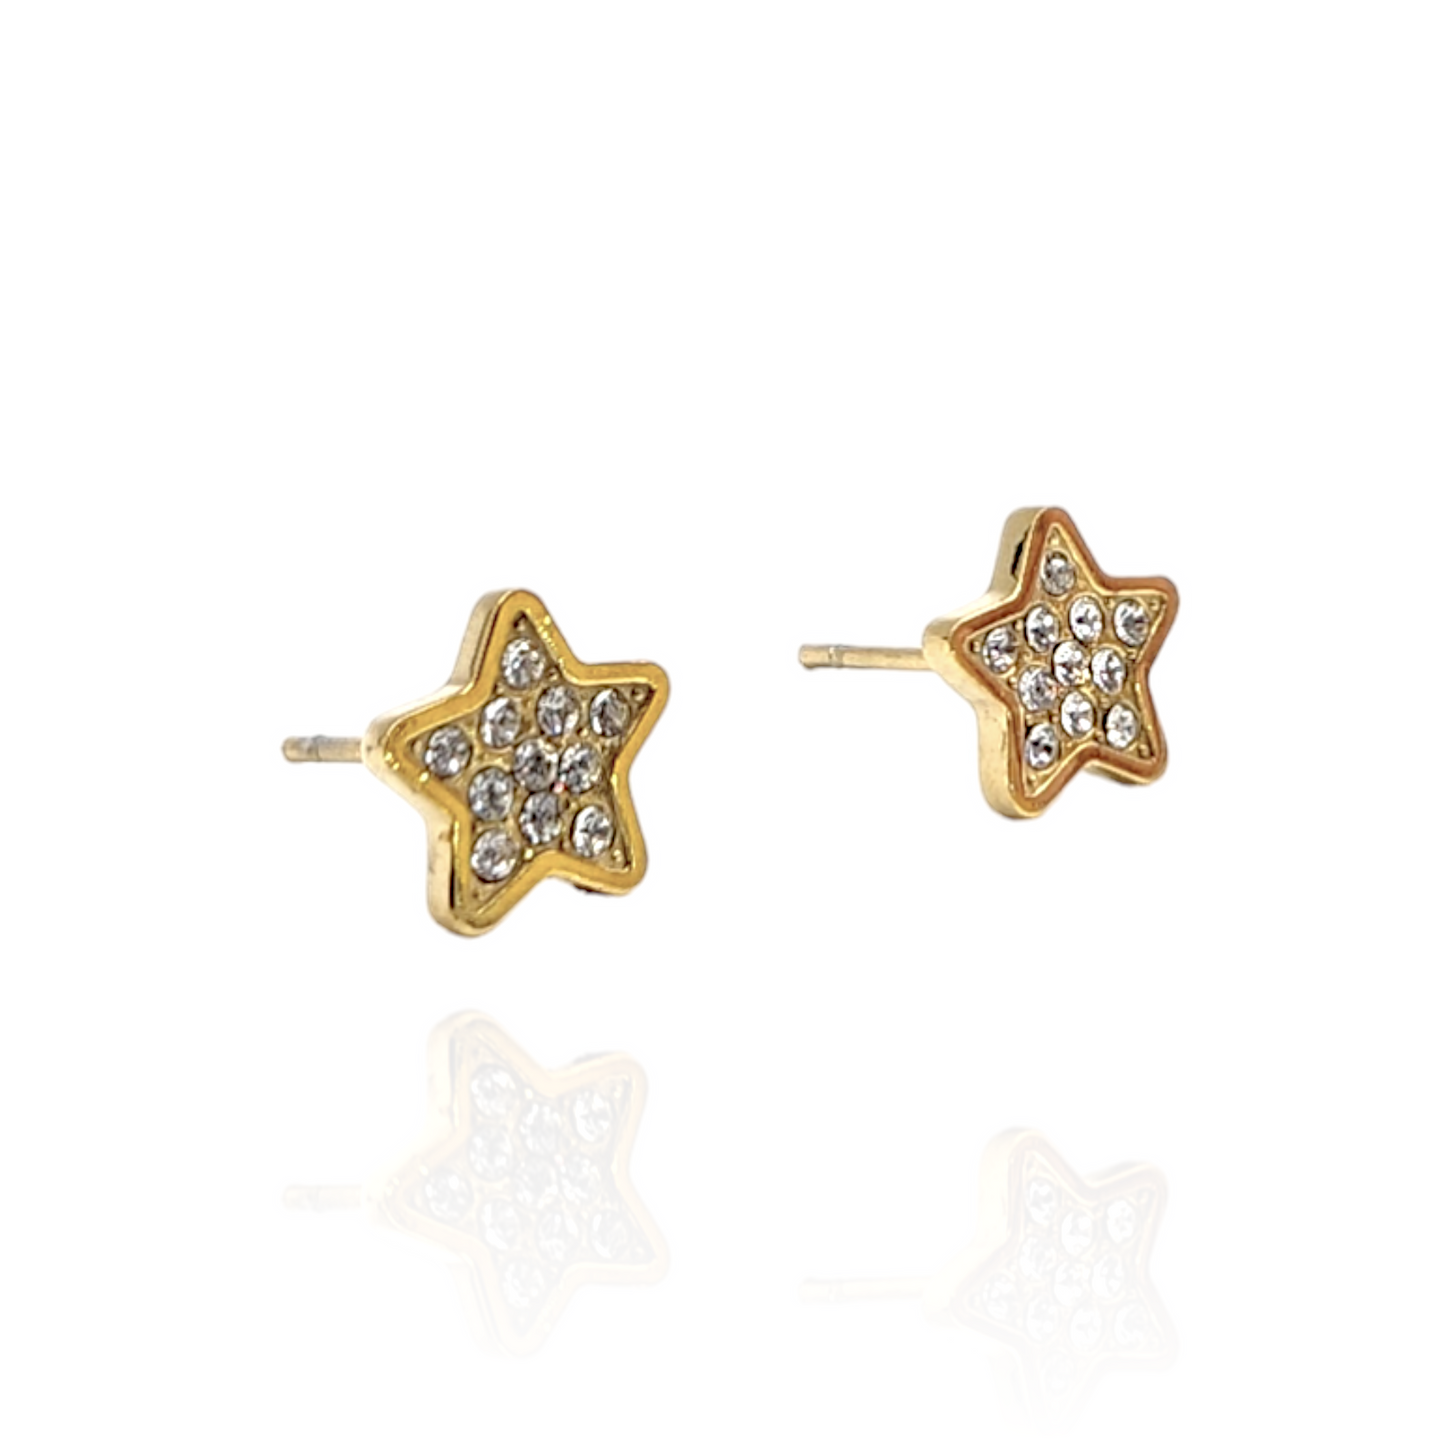 Small Star Earrings